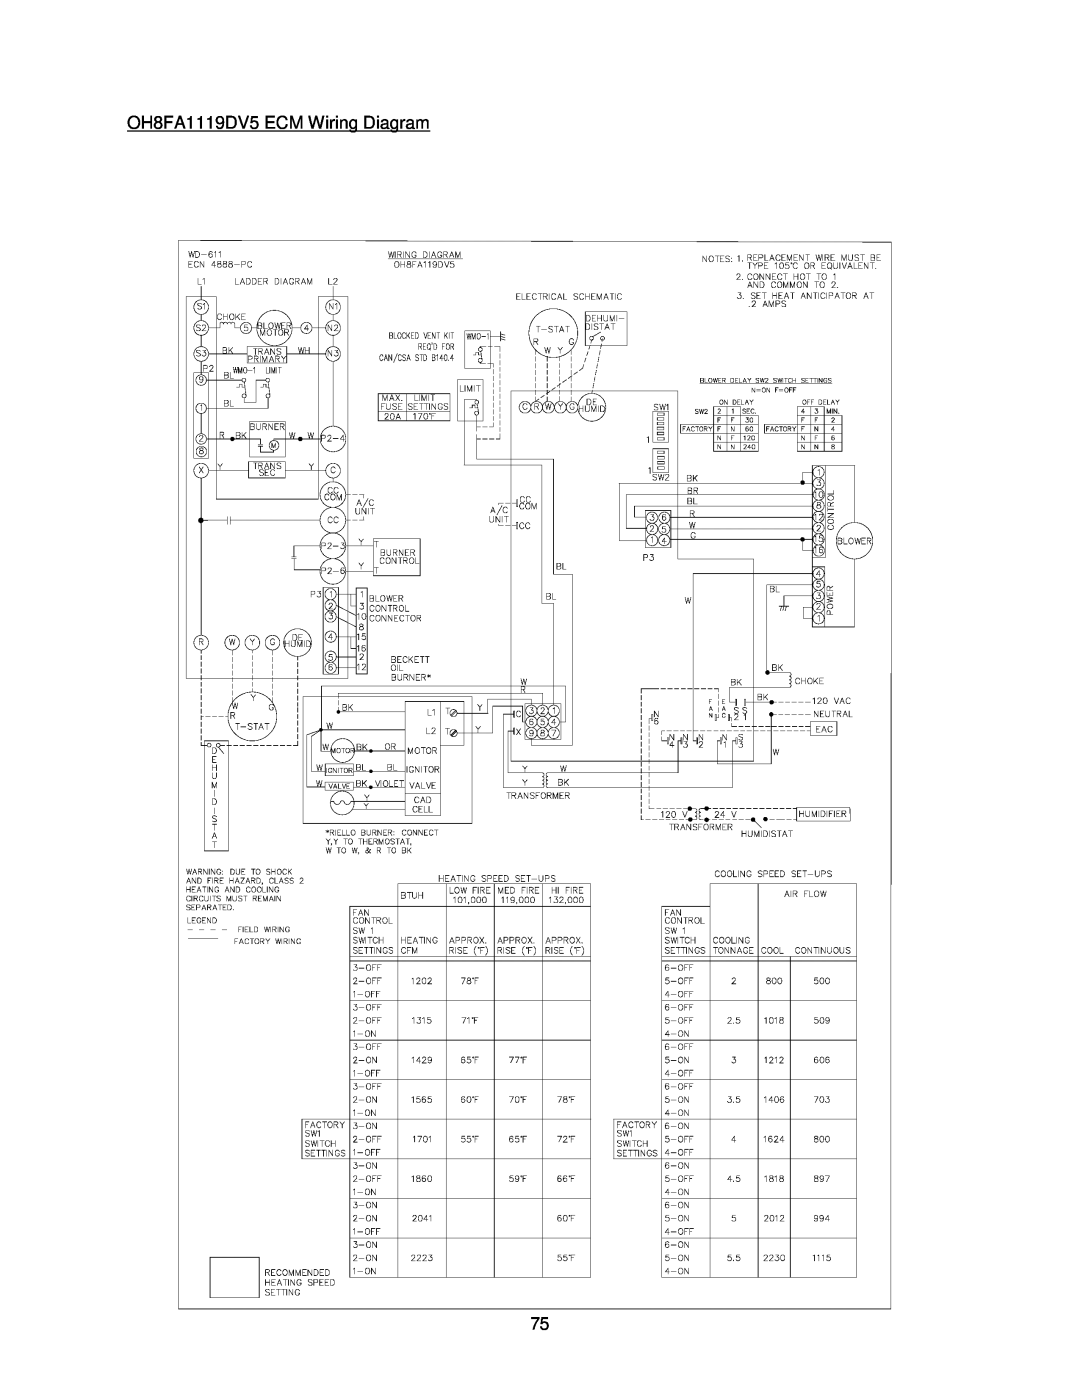 Thermo Products OHFA199DV5B, OHFA199DV5R operation manual OH8FA1119DV5 ECM Wiring Diagram 